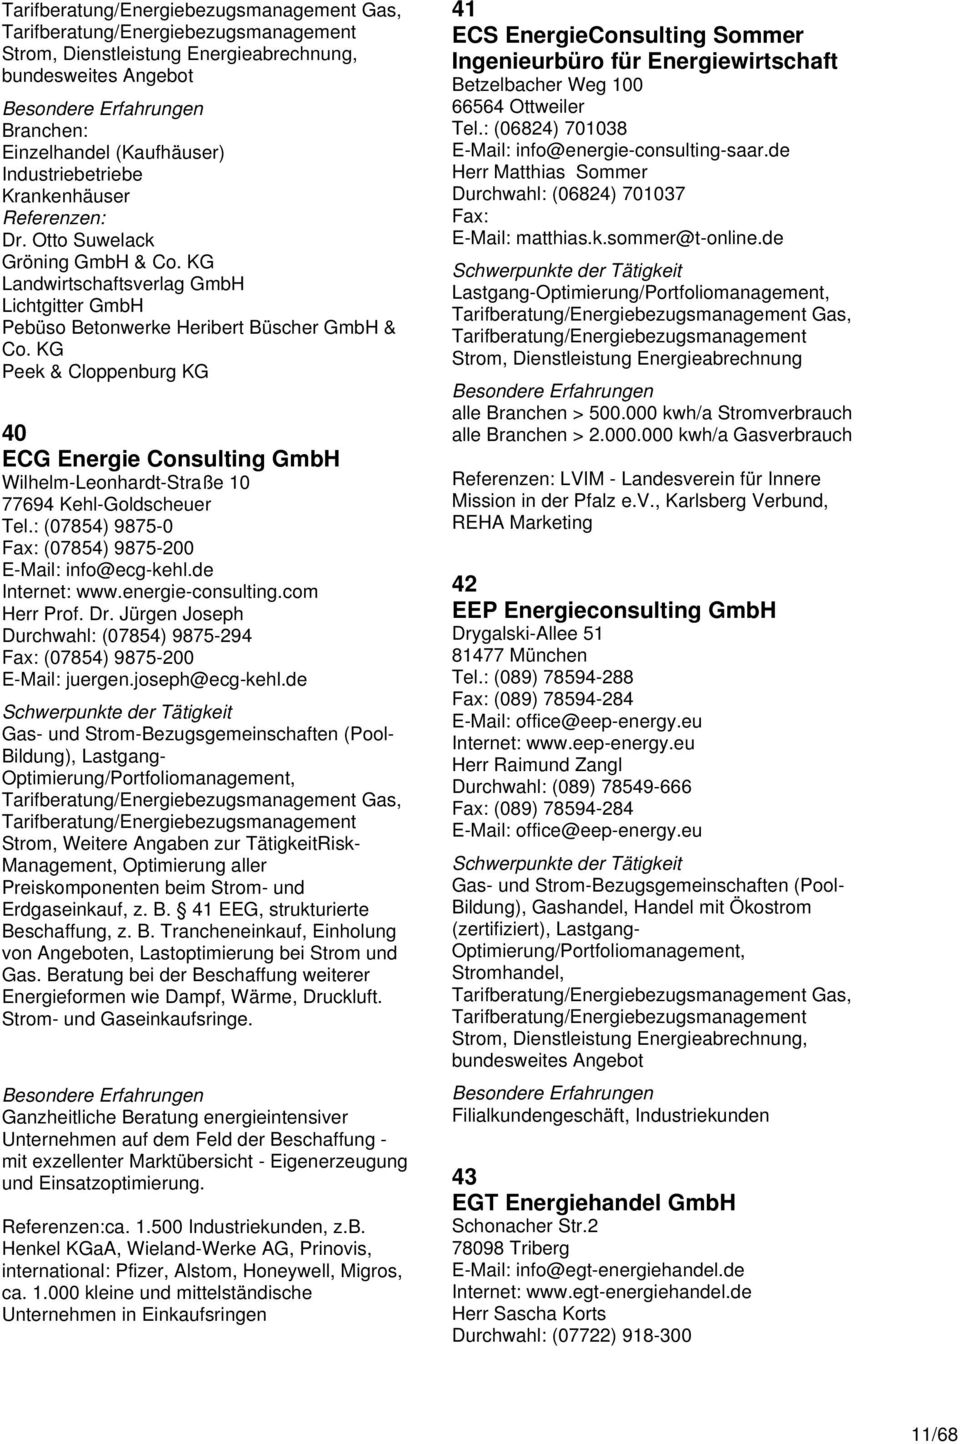 energie-consulting.com Herr Prof. Dr. Jürgen Joseph (07854) 9875-294 (07854) 9875-200 E-Mail: juergen.joseph@ecg-kehl.